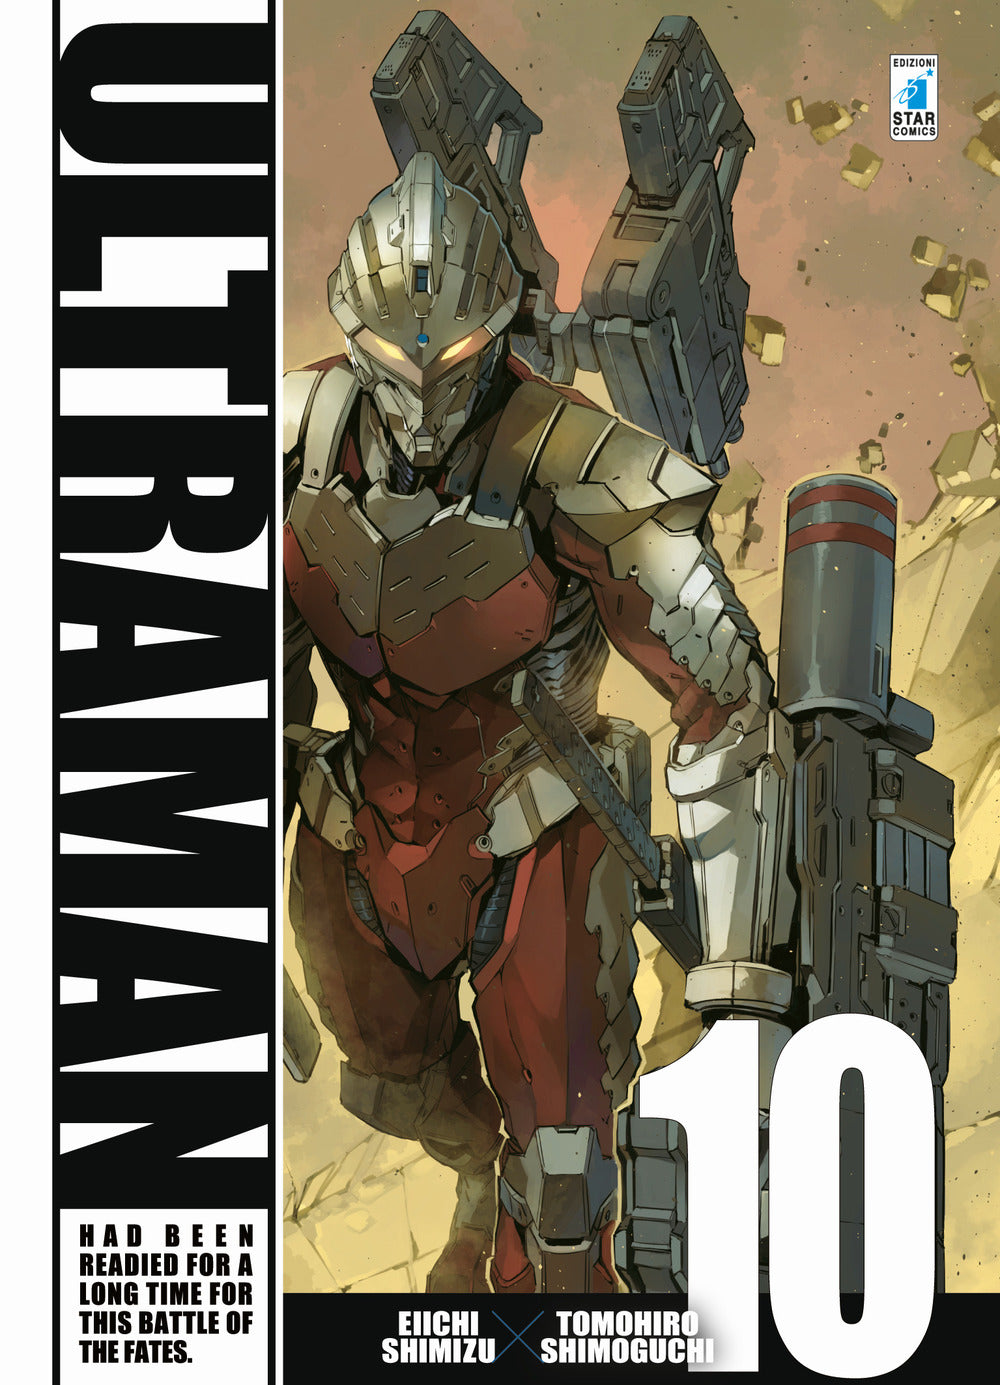 Ultraman. Vol. 10